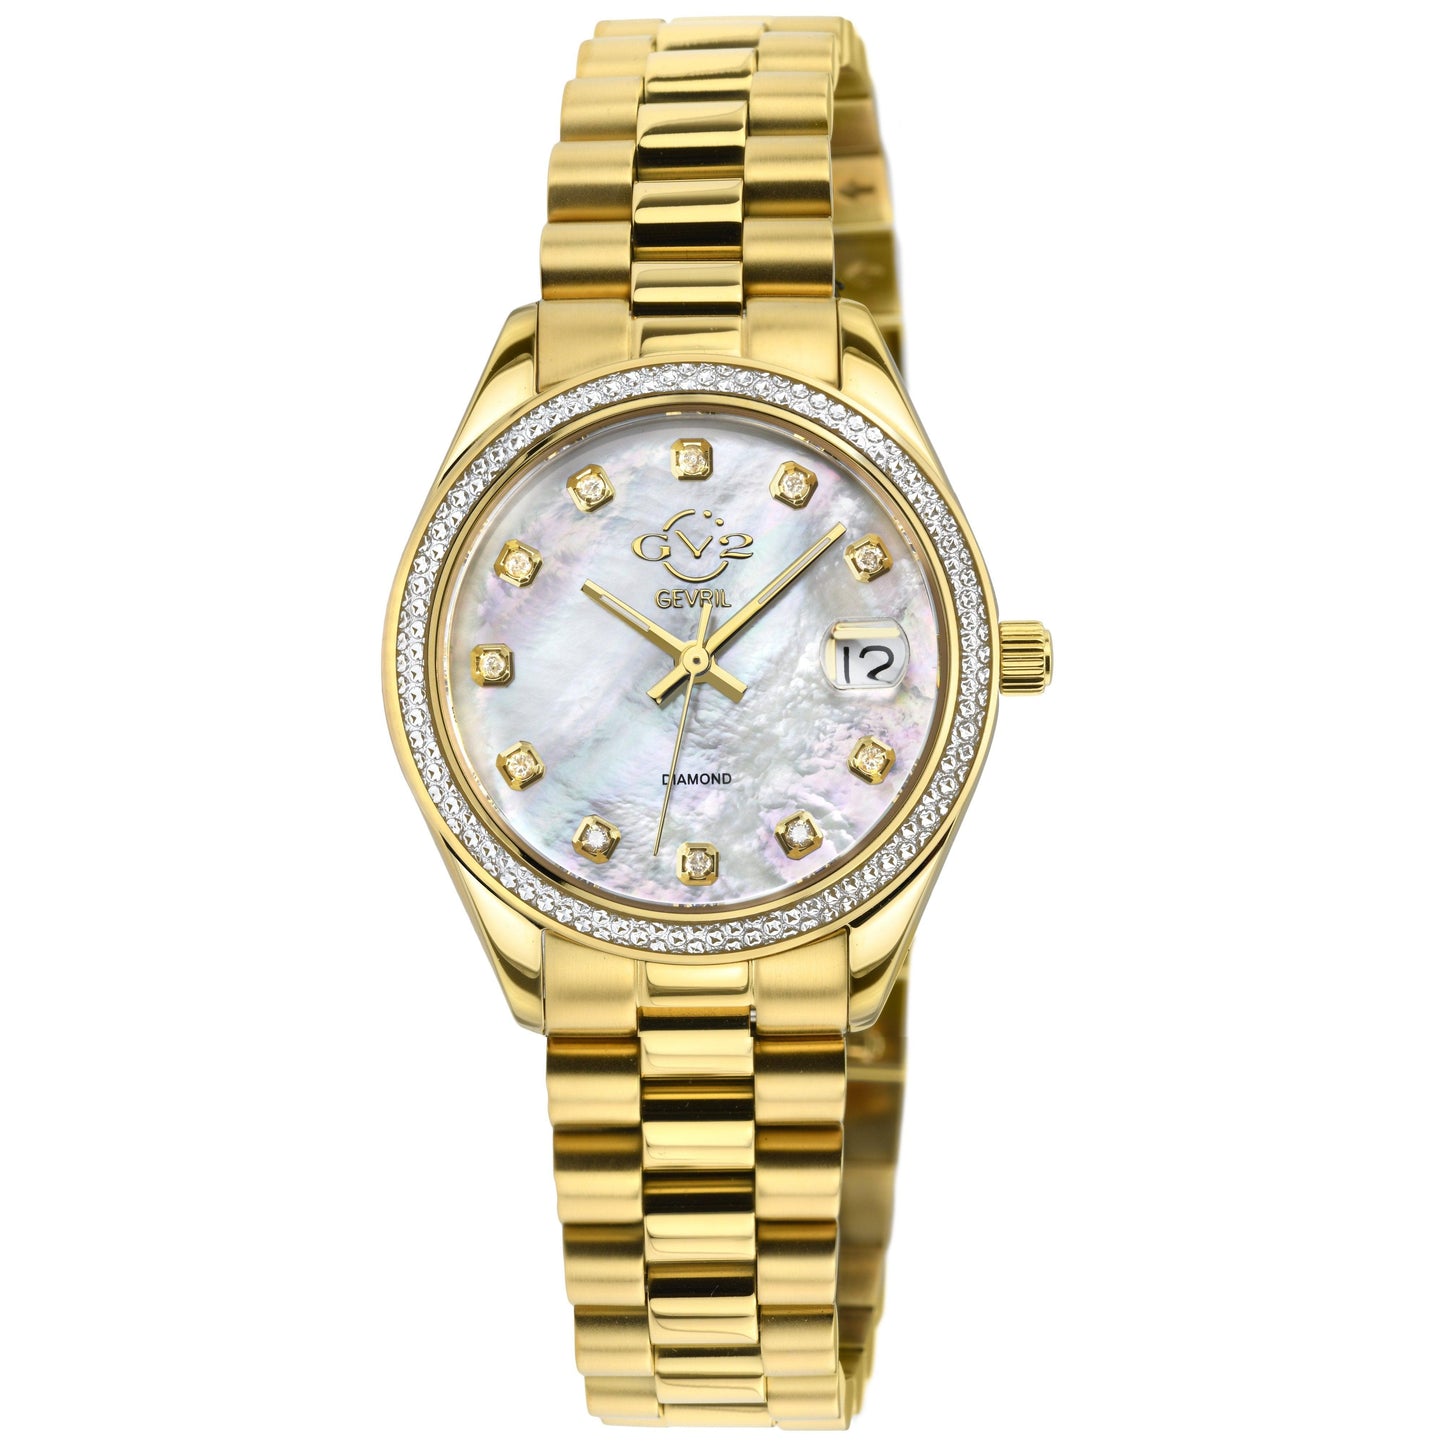 Gevril-Luxury-Swiss-Watches-GV2 Turin Diamond-12422B